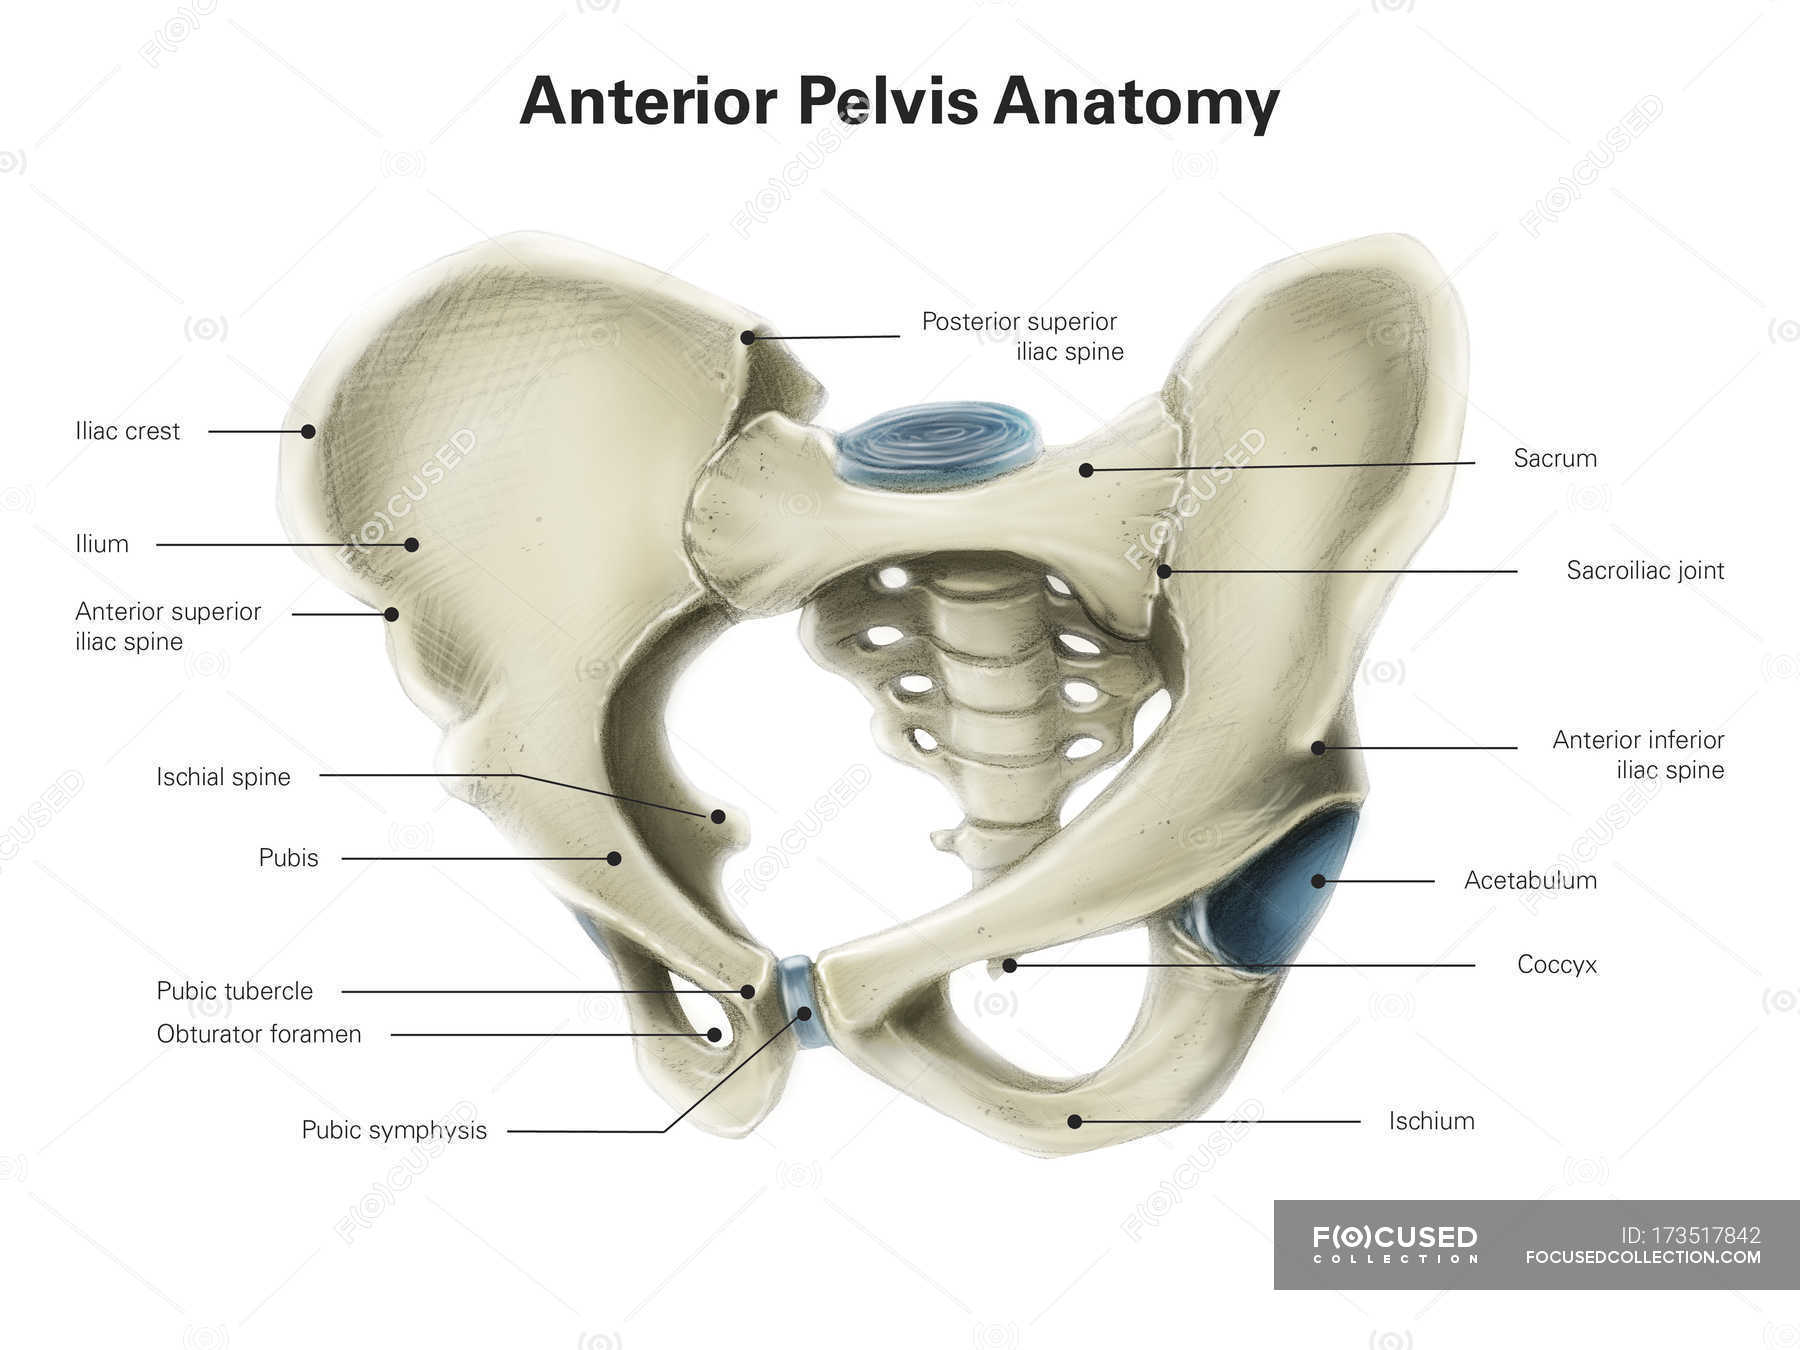 Anatomy Of The Pelvis Human Body Anatomy Pelvis Anatomy Body Anatomy - Bank2home.com